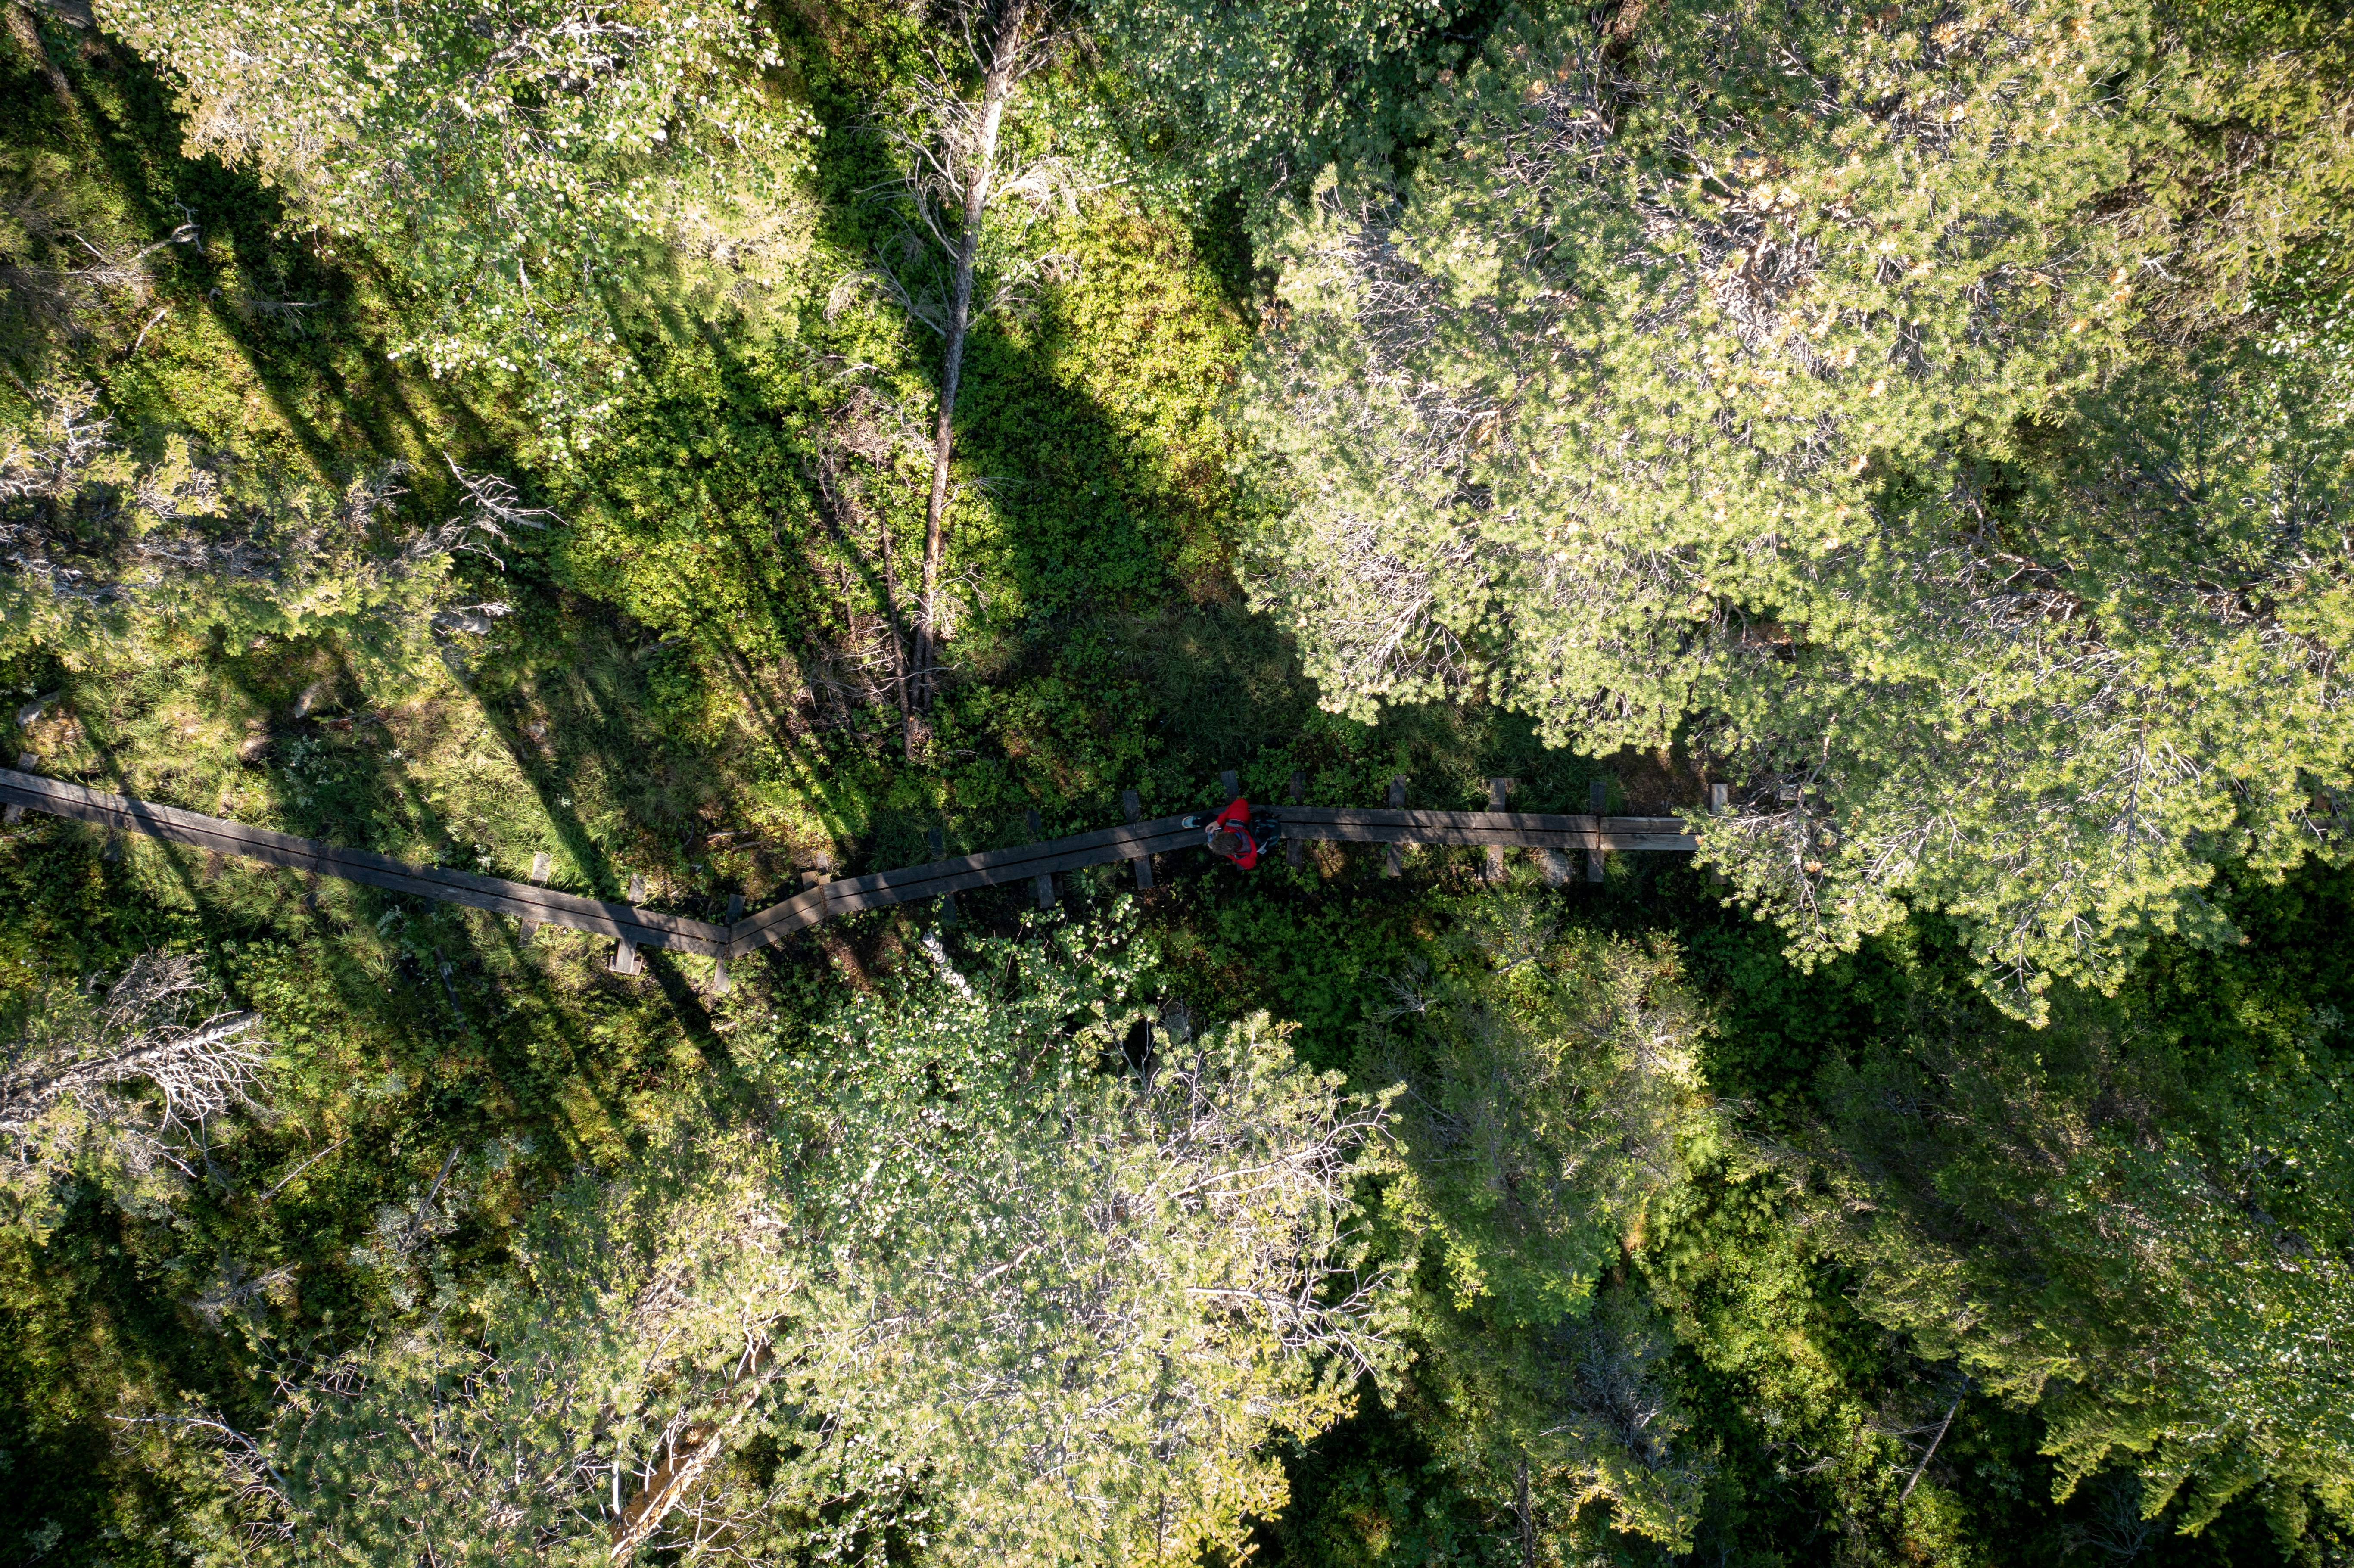 people walking on bridge between green trees during daytime